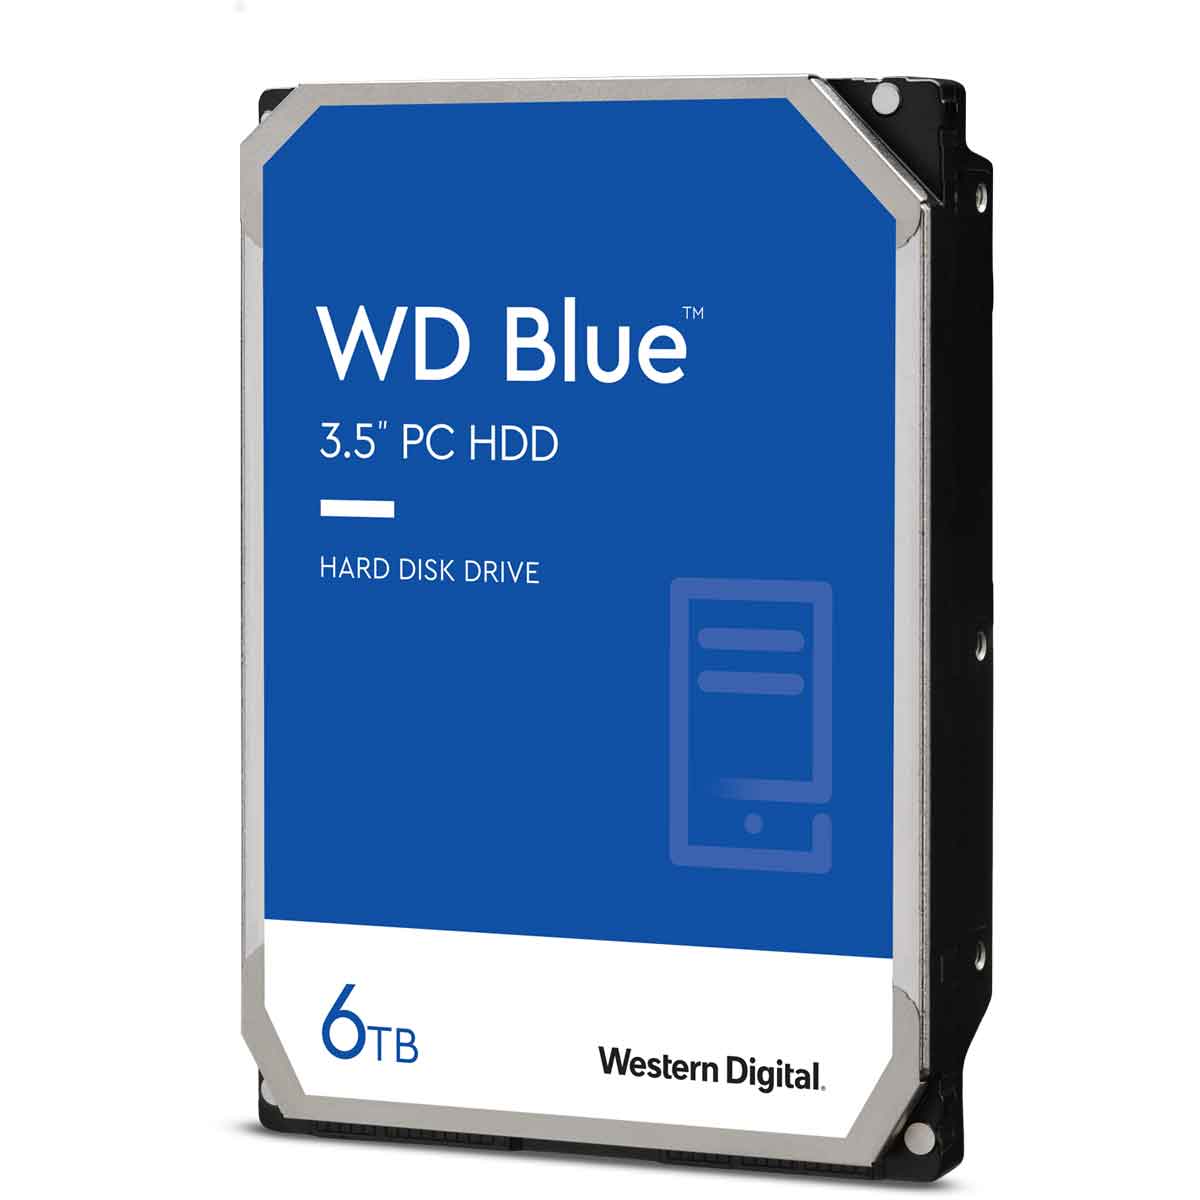 【中古】 Western Digital wd3200js-57pdb0?320?GB DCM dhbacajchn